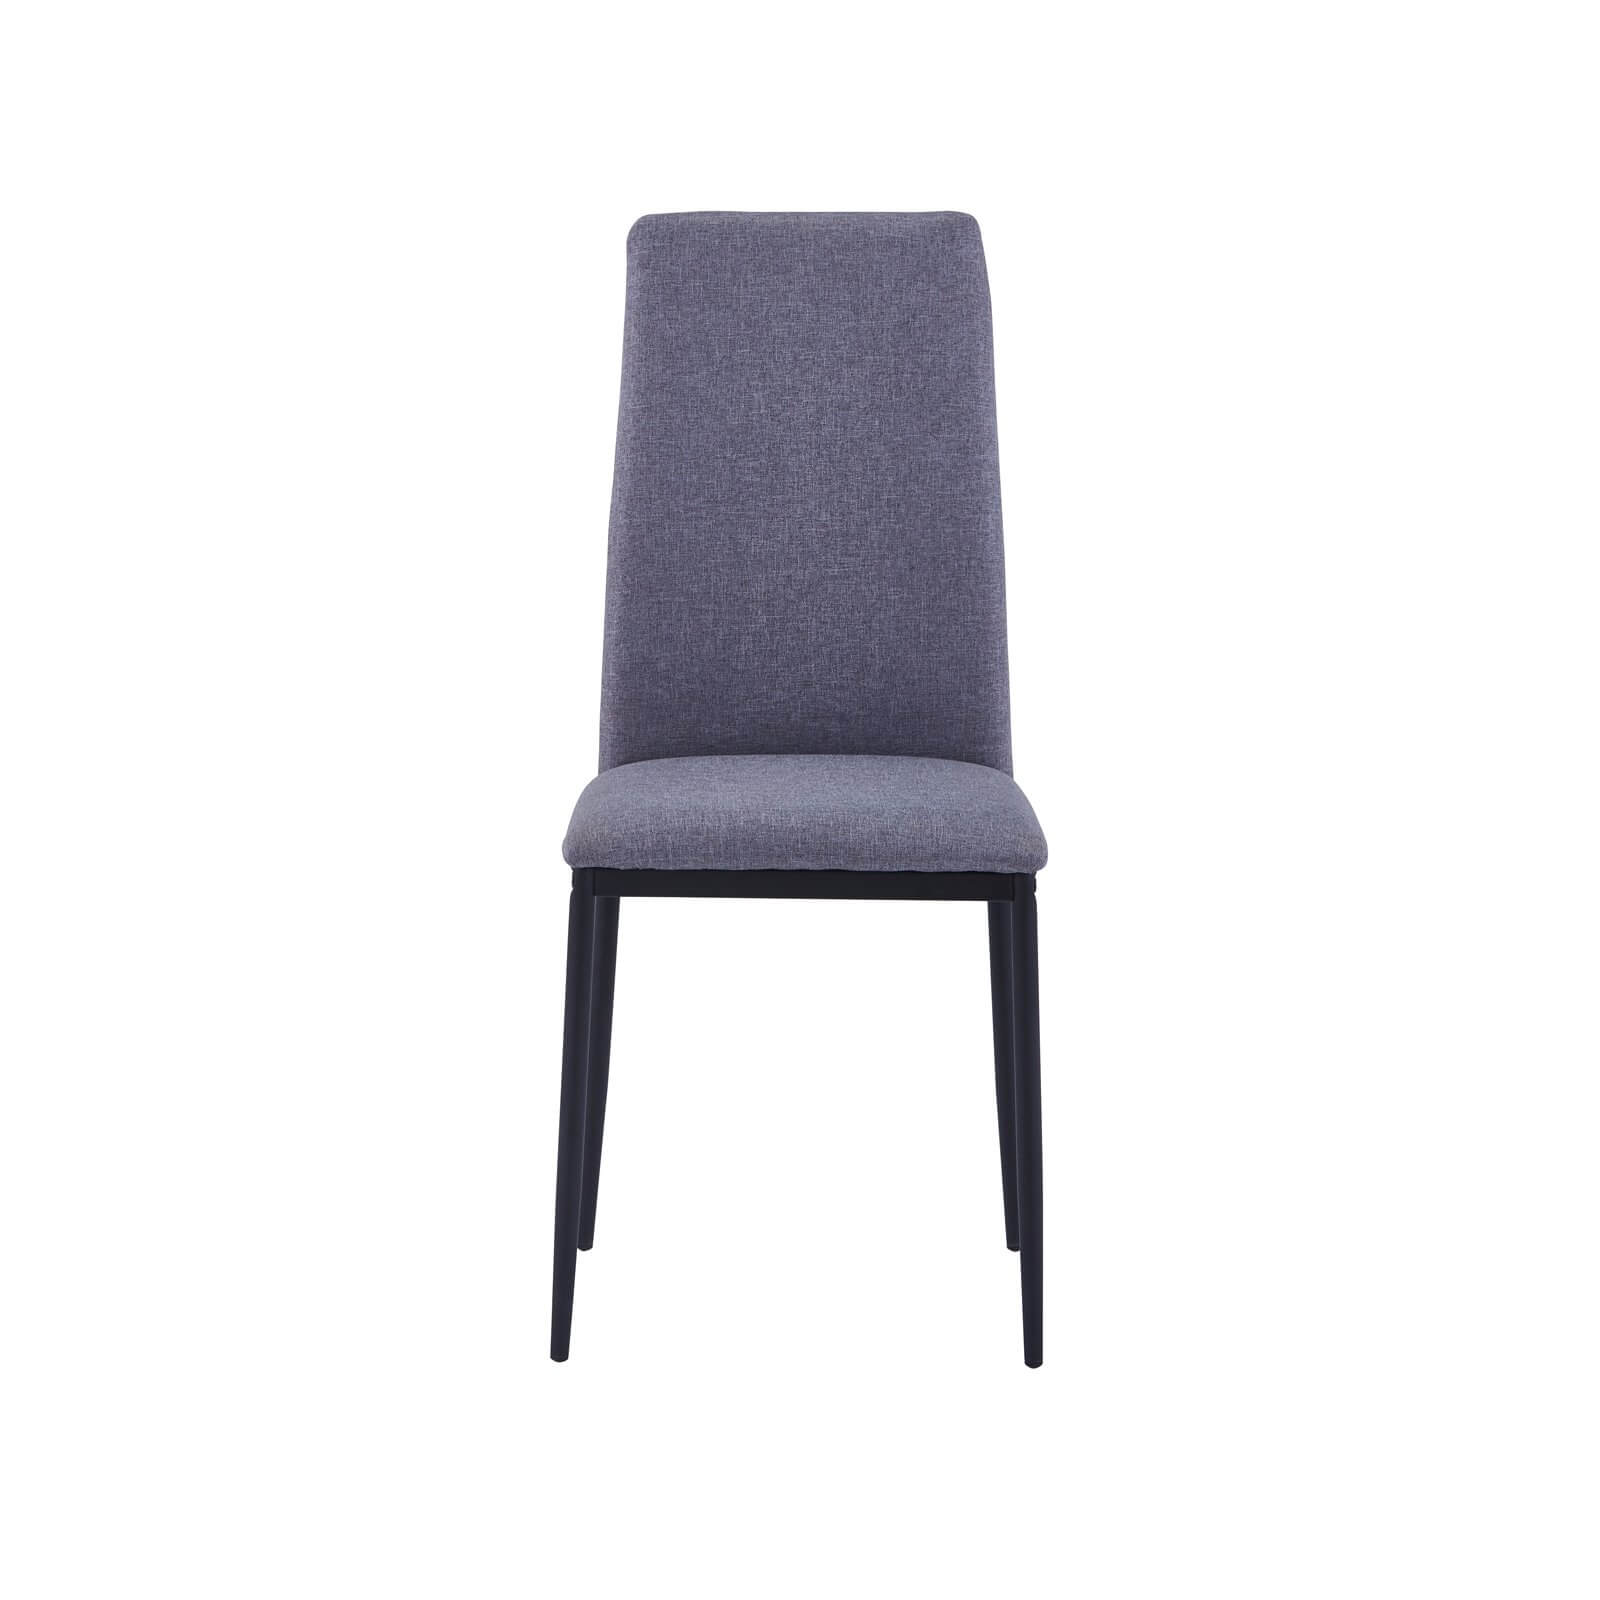 Elton Dining Chairs - Set of 2 - Grey